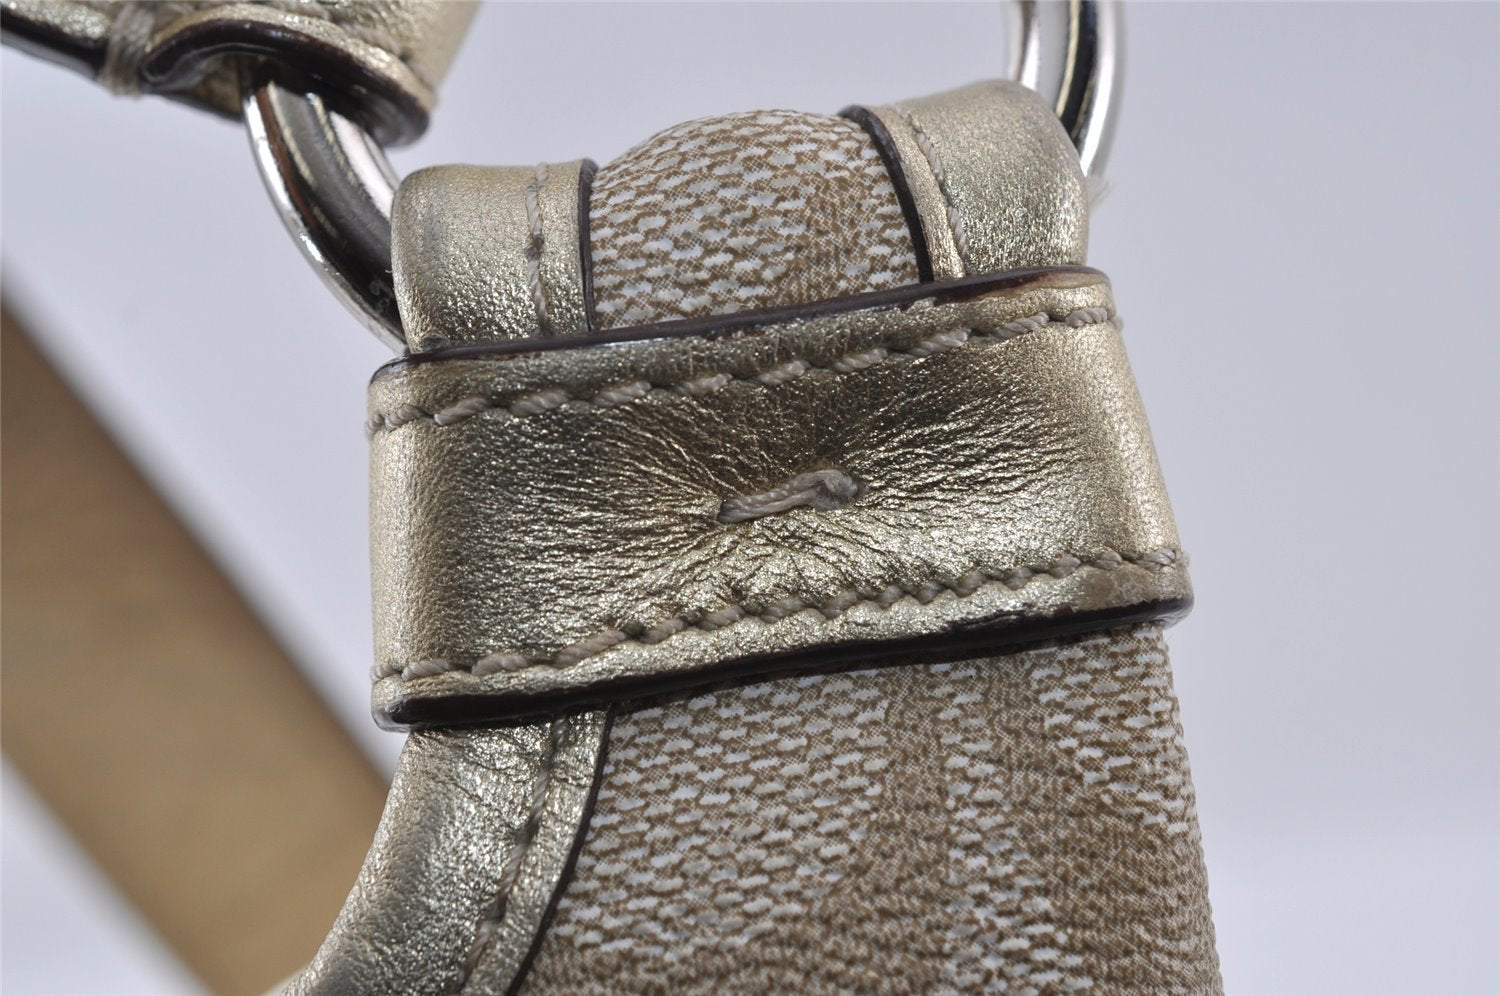 Authentic COACH Signature Shoulder Cross Body Bag PVC Leather F15704 Beige 4019I